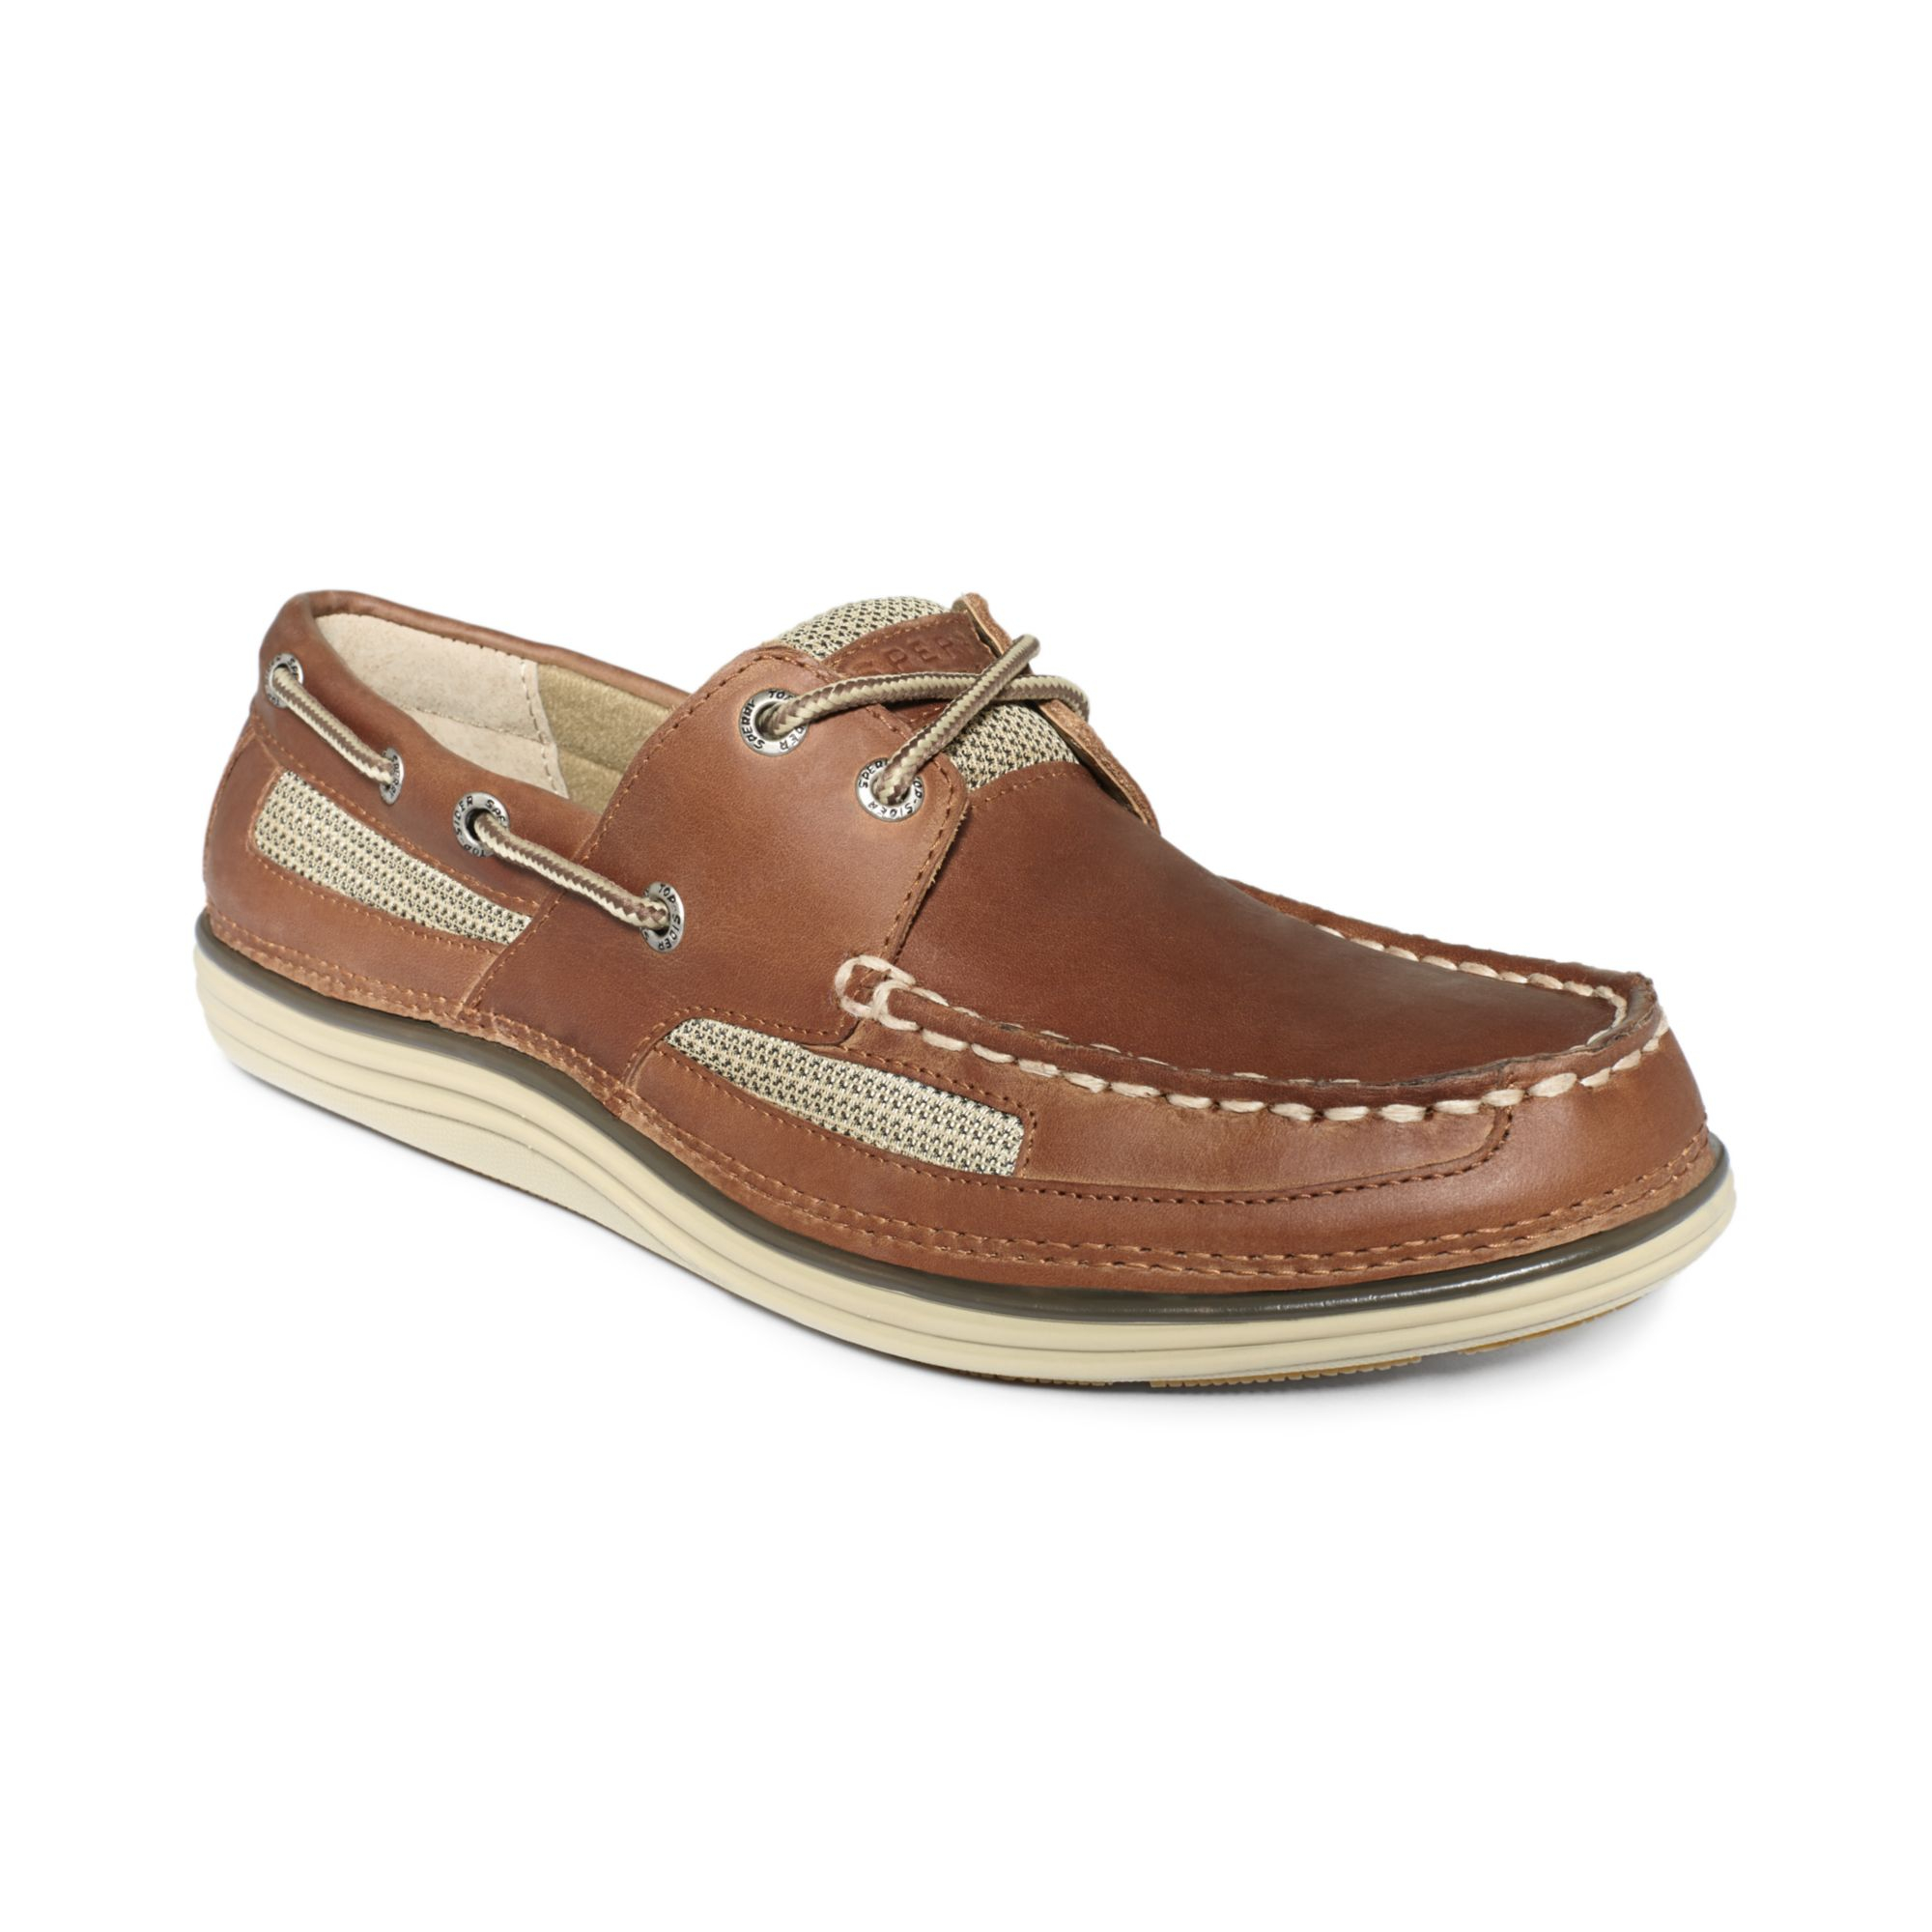 Sperry Topsider Lightship 2Eye Boat Shoes in Brown for Men Dark Tan 